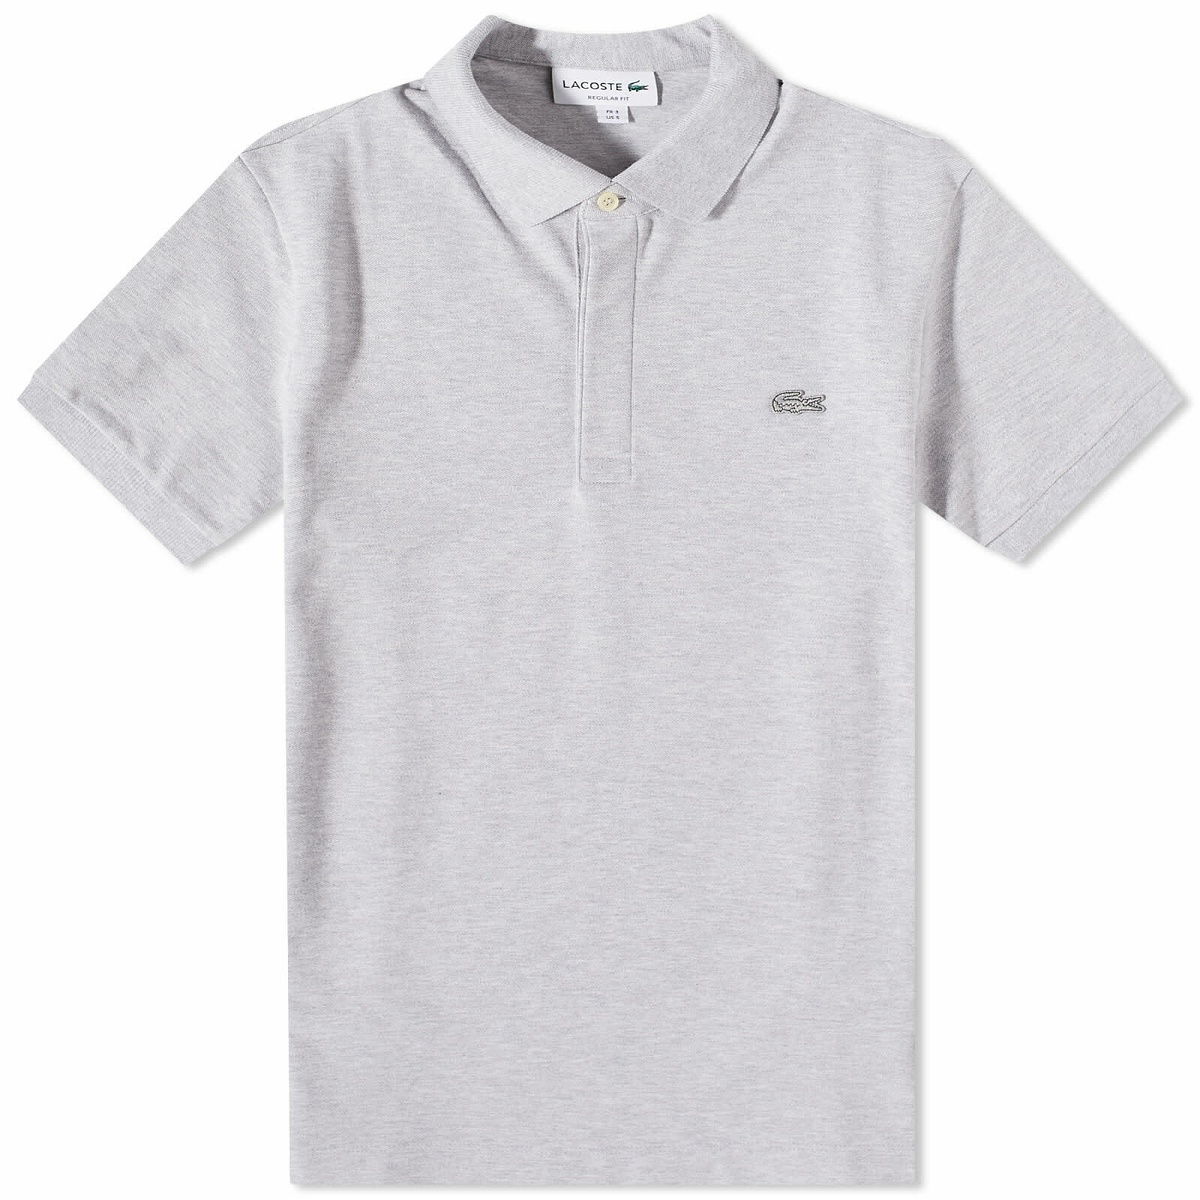 Men\'s Polo Lacoste Pique Chine Fit Shirt in Regular Lacoste Paris Silver